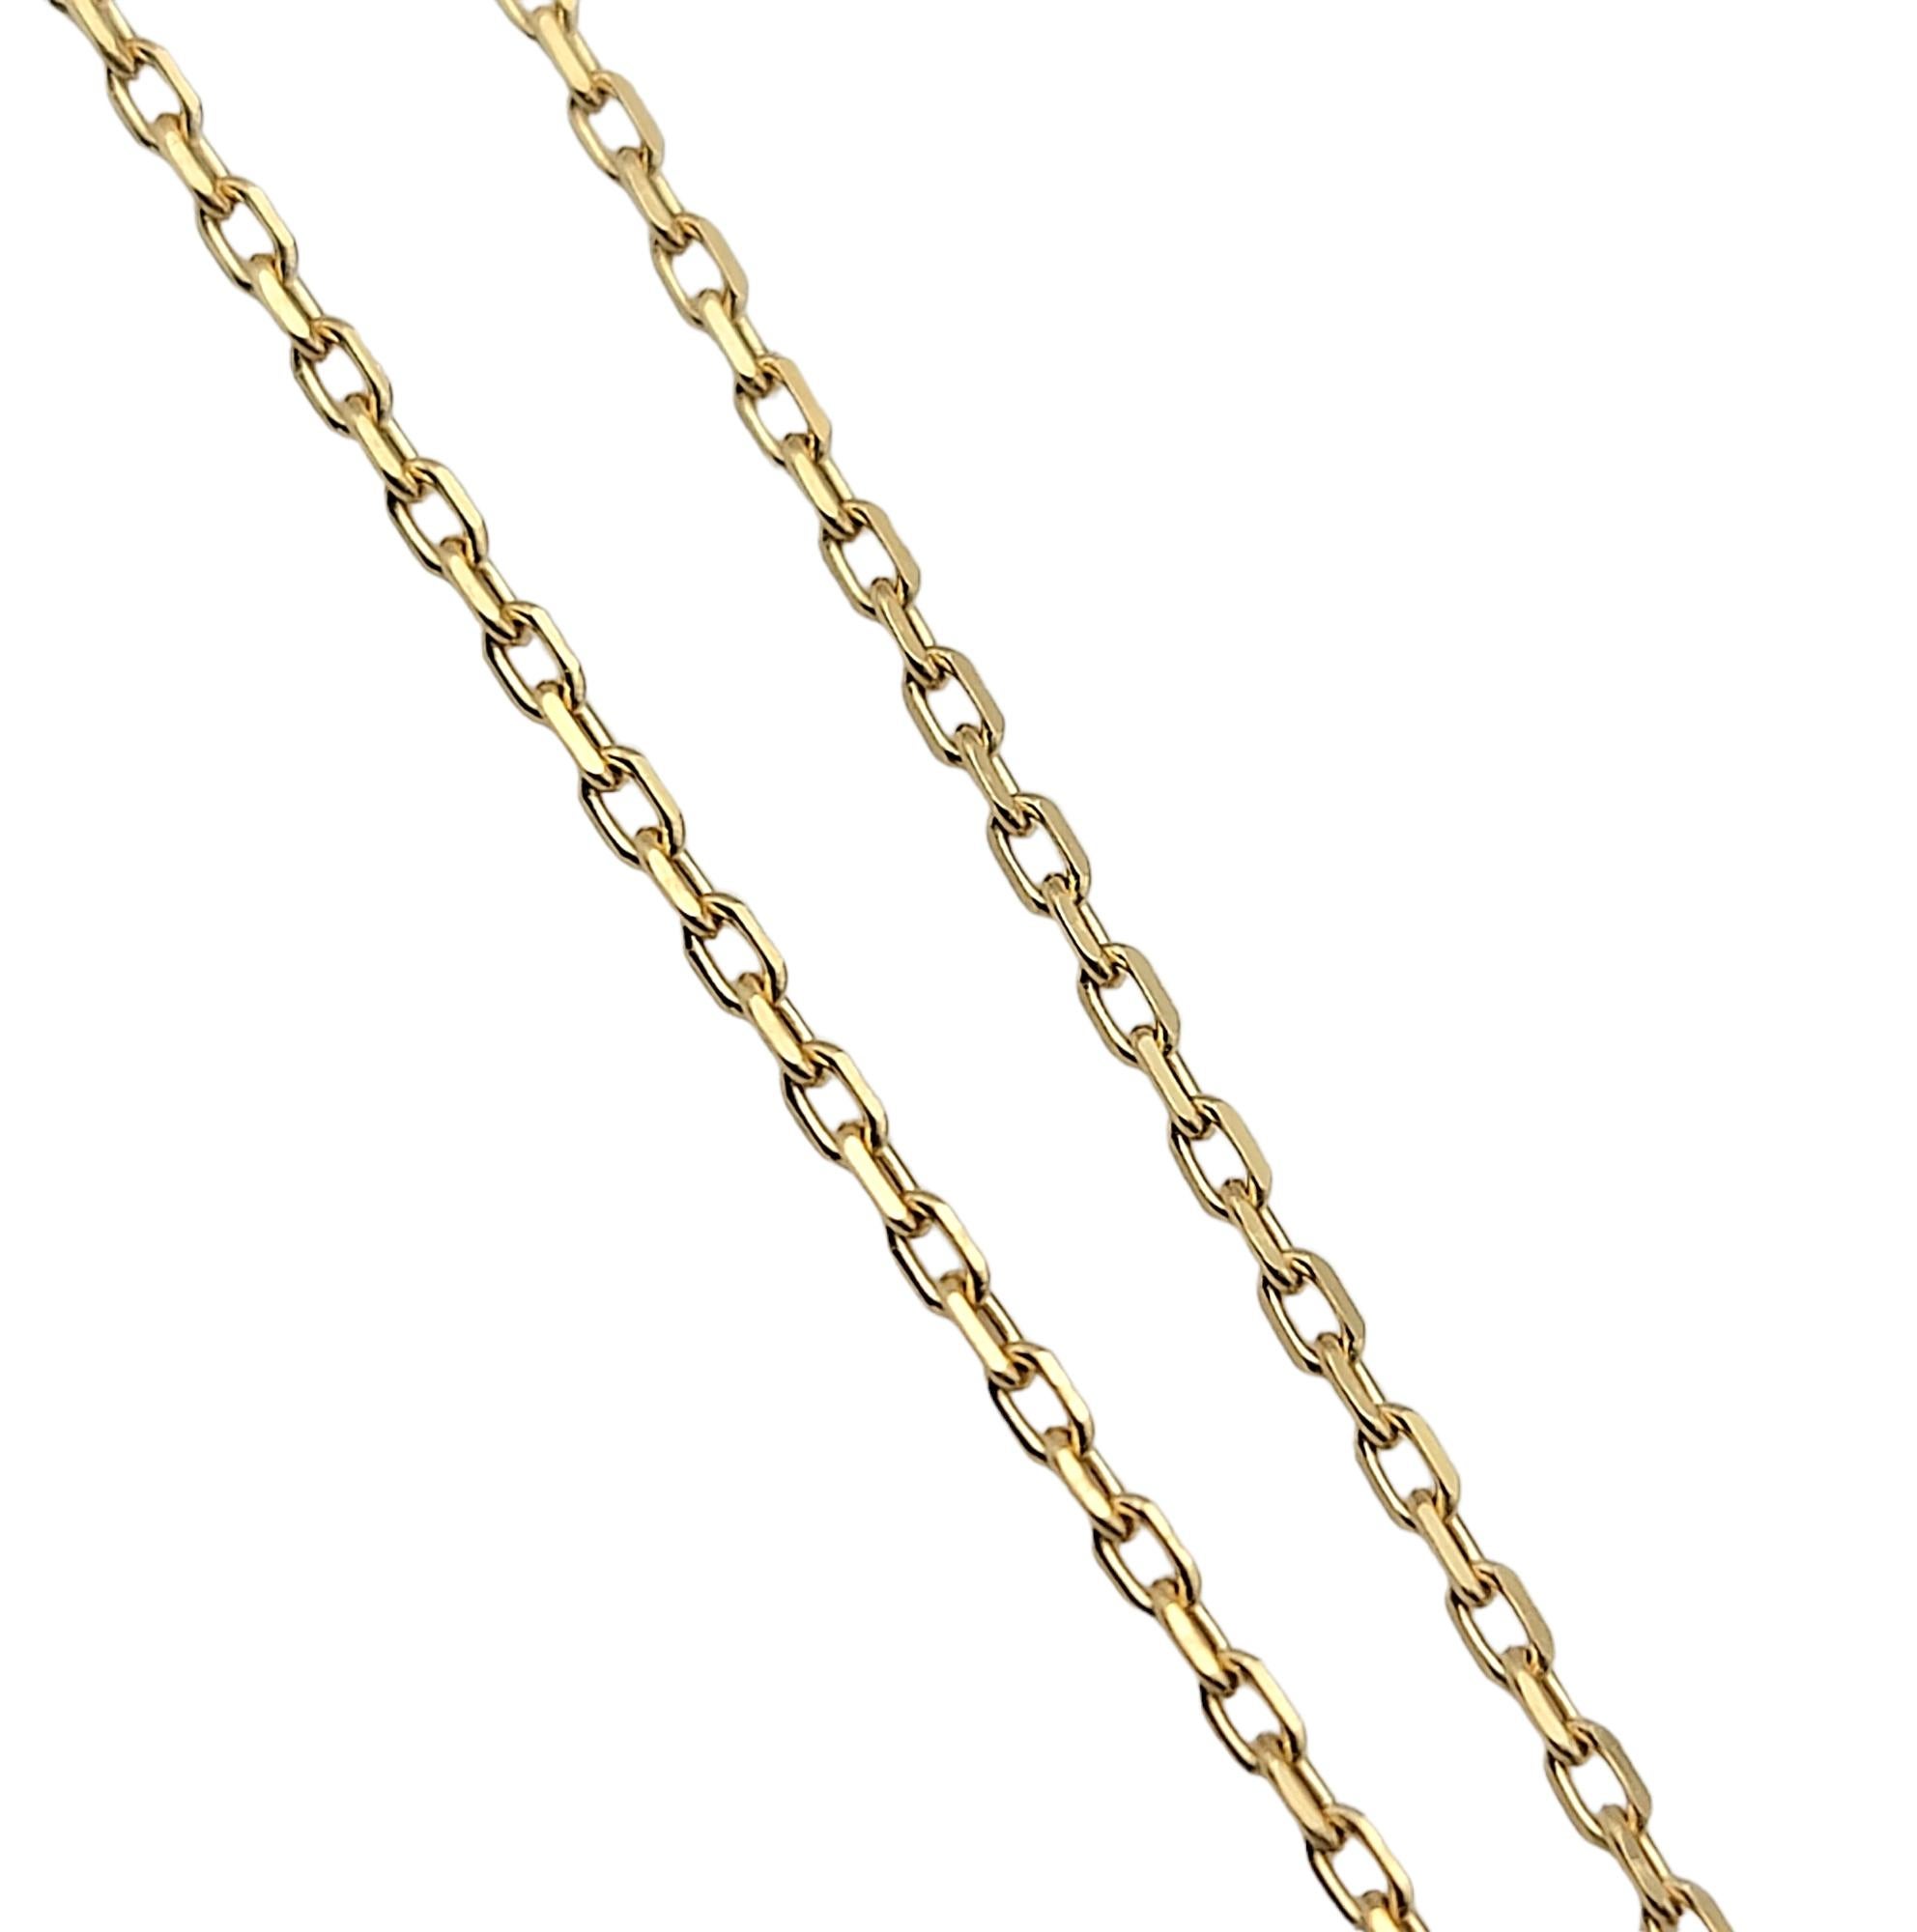 Cartier Juste Un Clou 18 Karat Yellow Gold Pendant Necklace with Diamonds 14-16